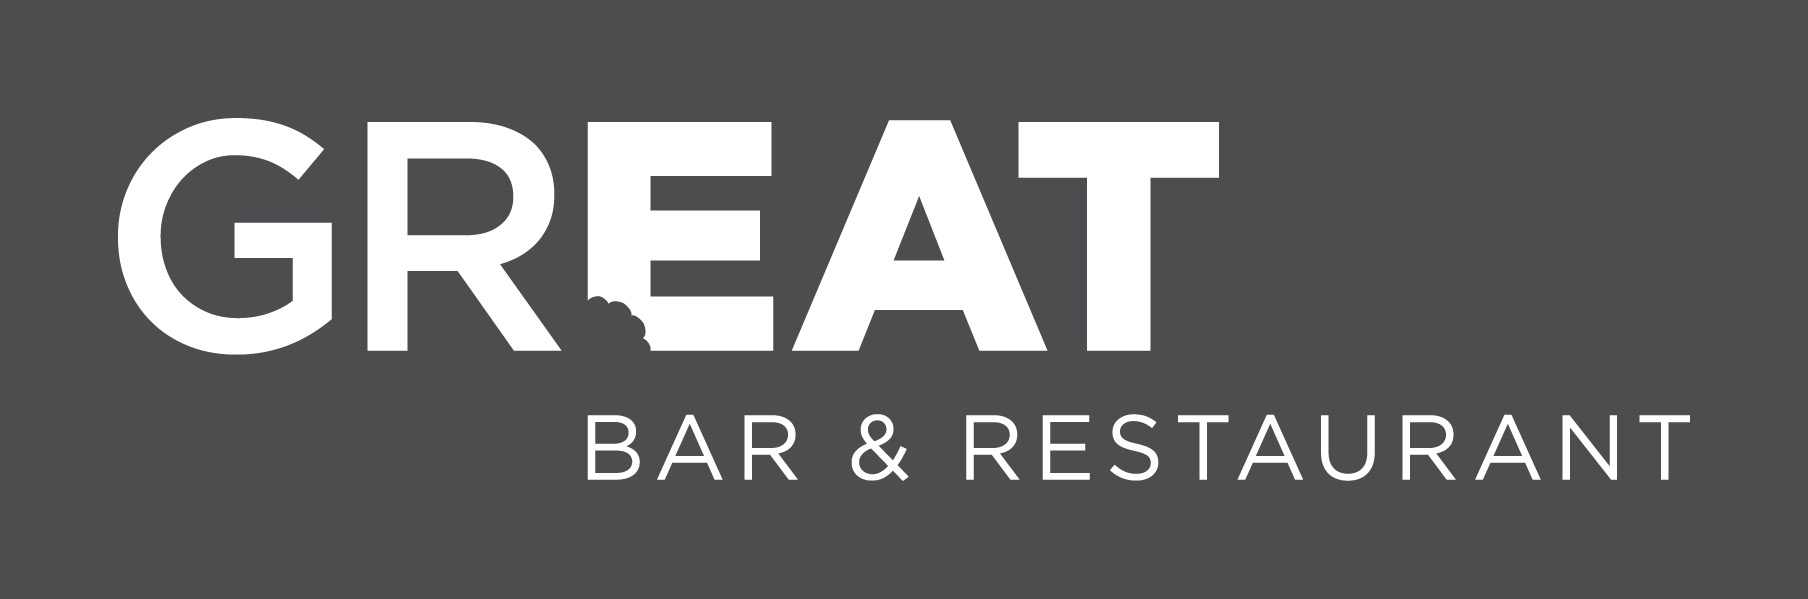 Great Bar & Restaurant